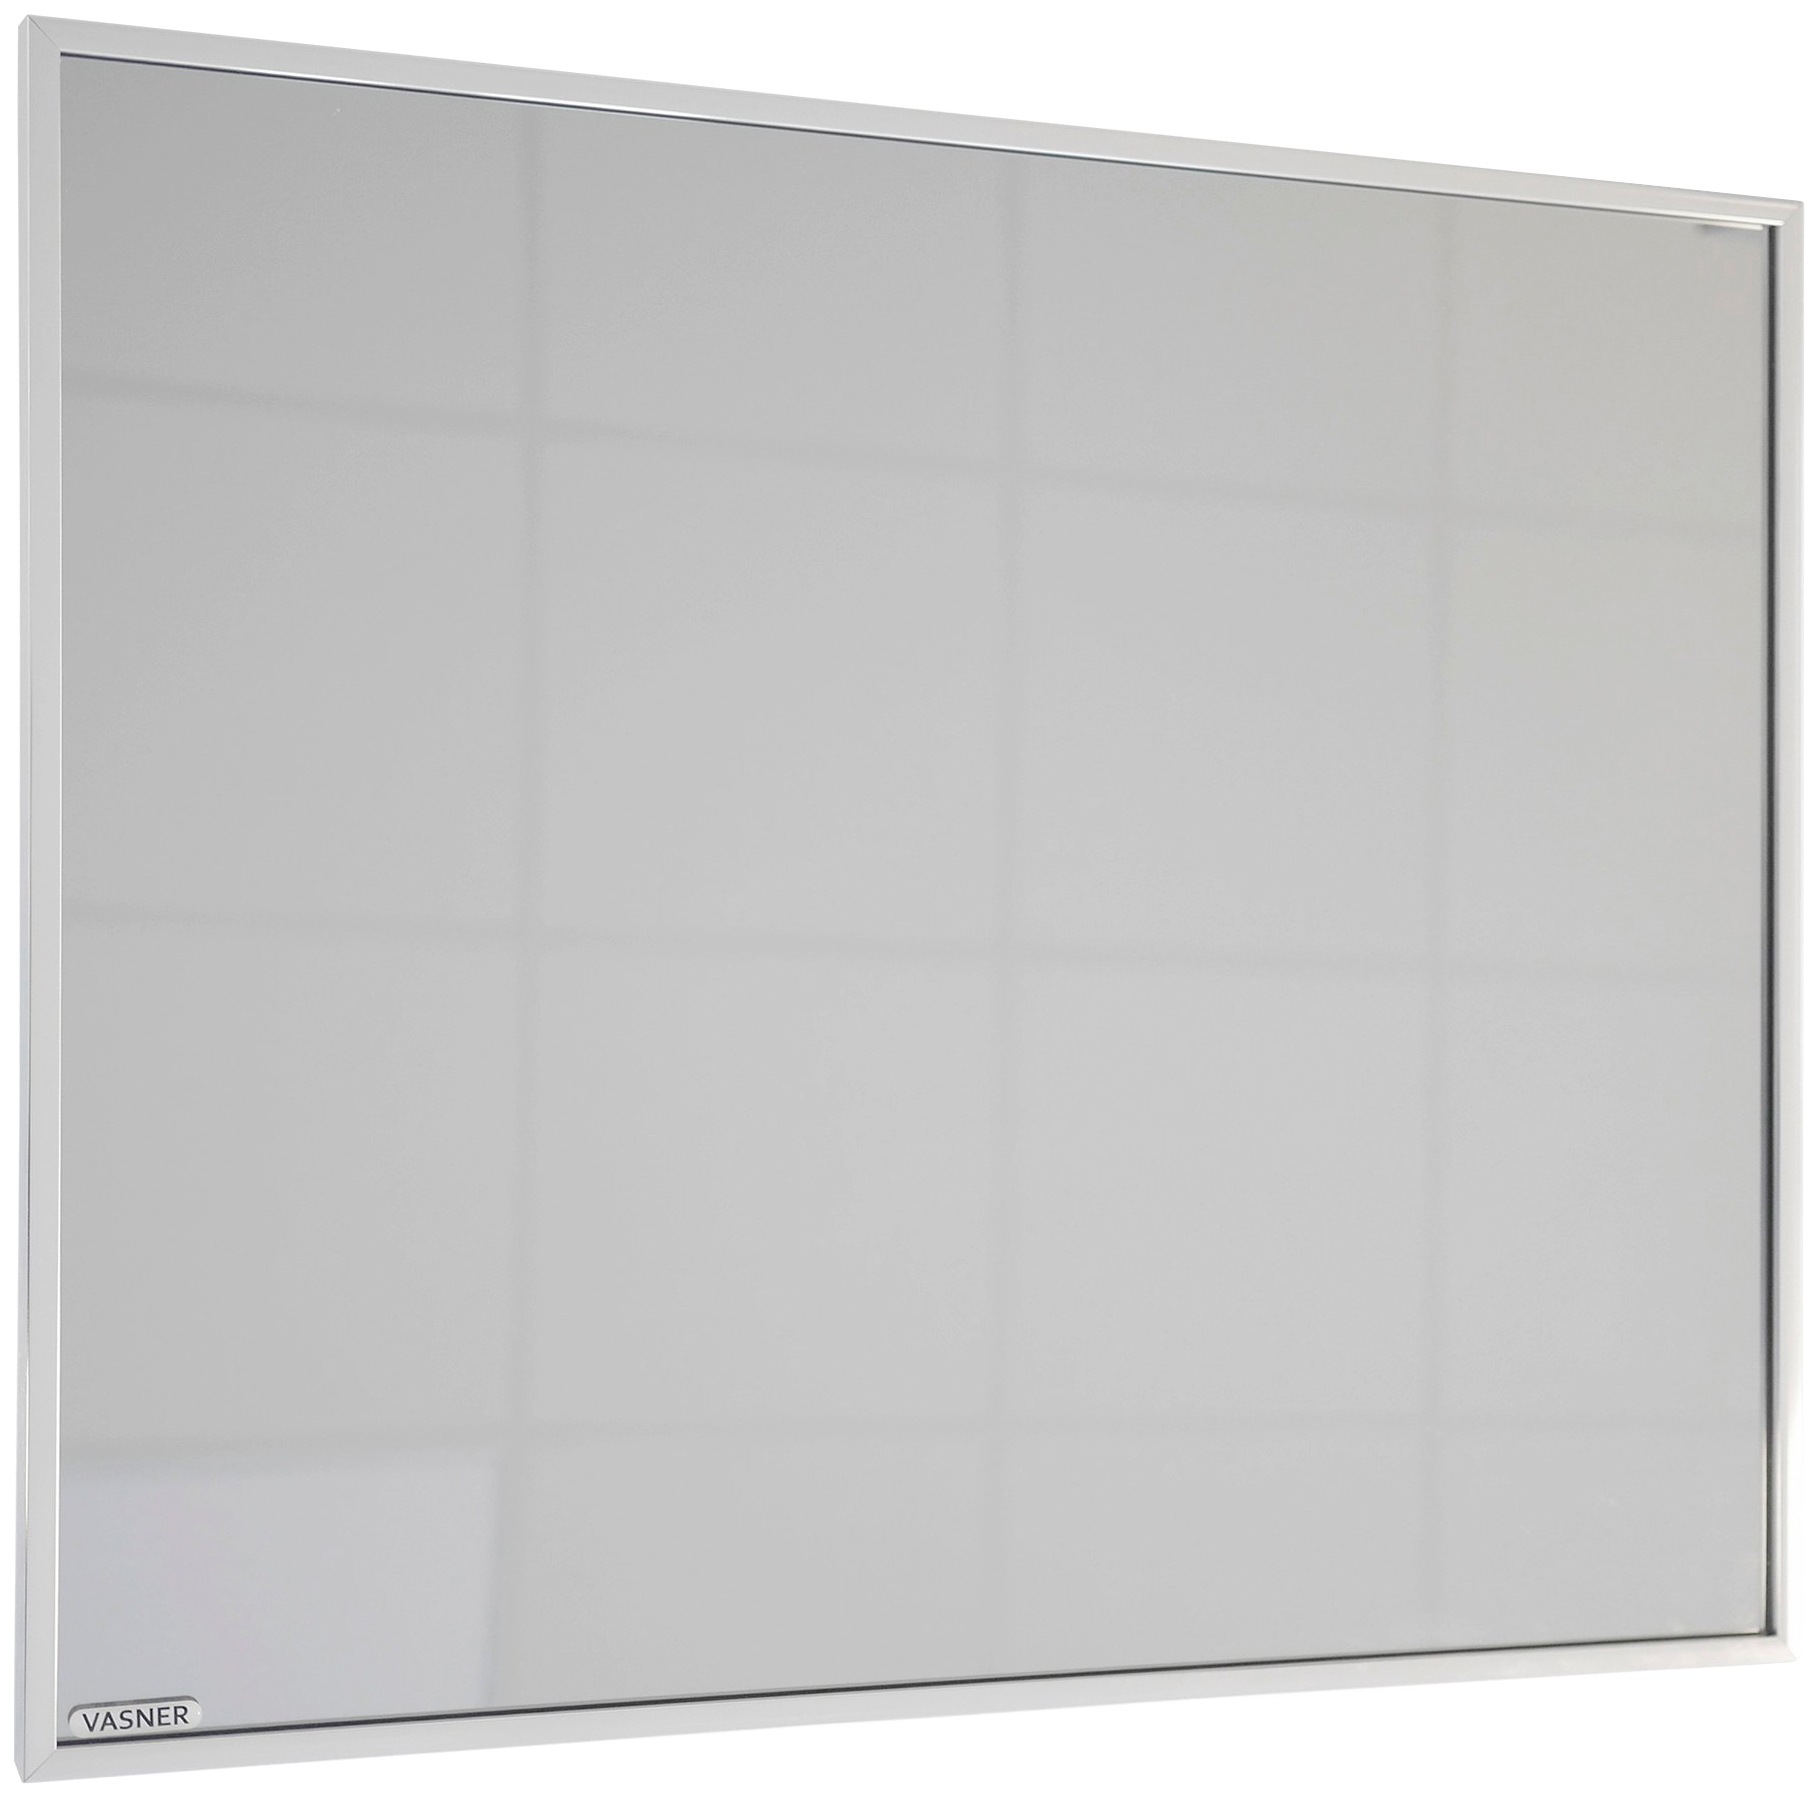 Vasner Infrarotheizung "Zipris S", Glas/Chrom, 500 W, 90x60 cm